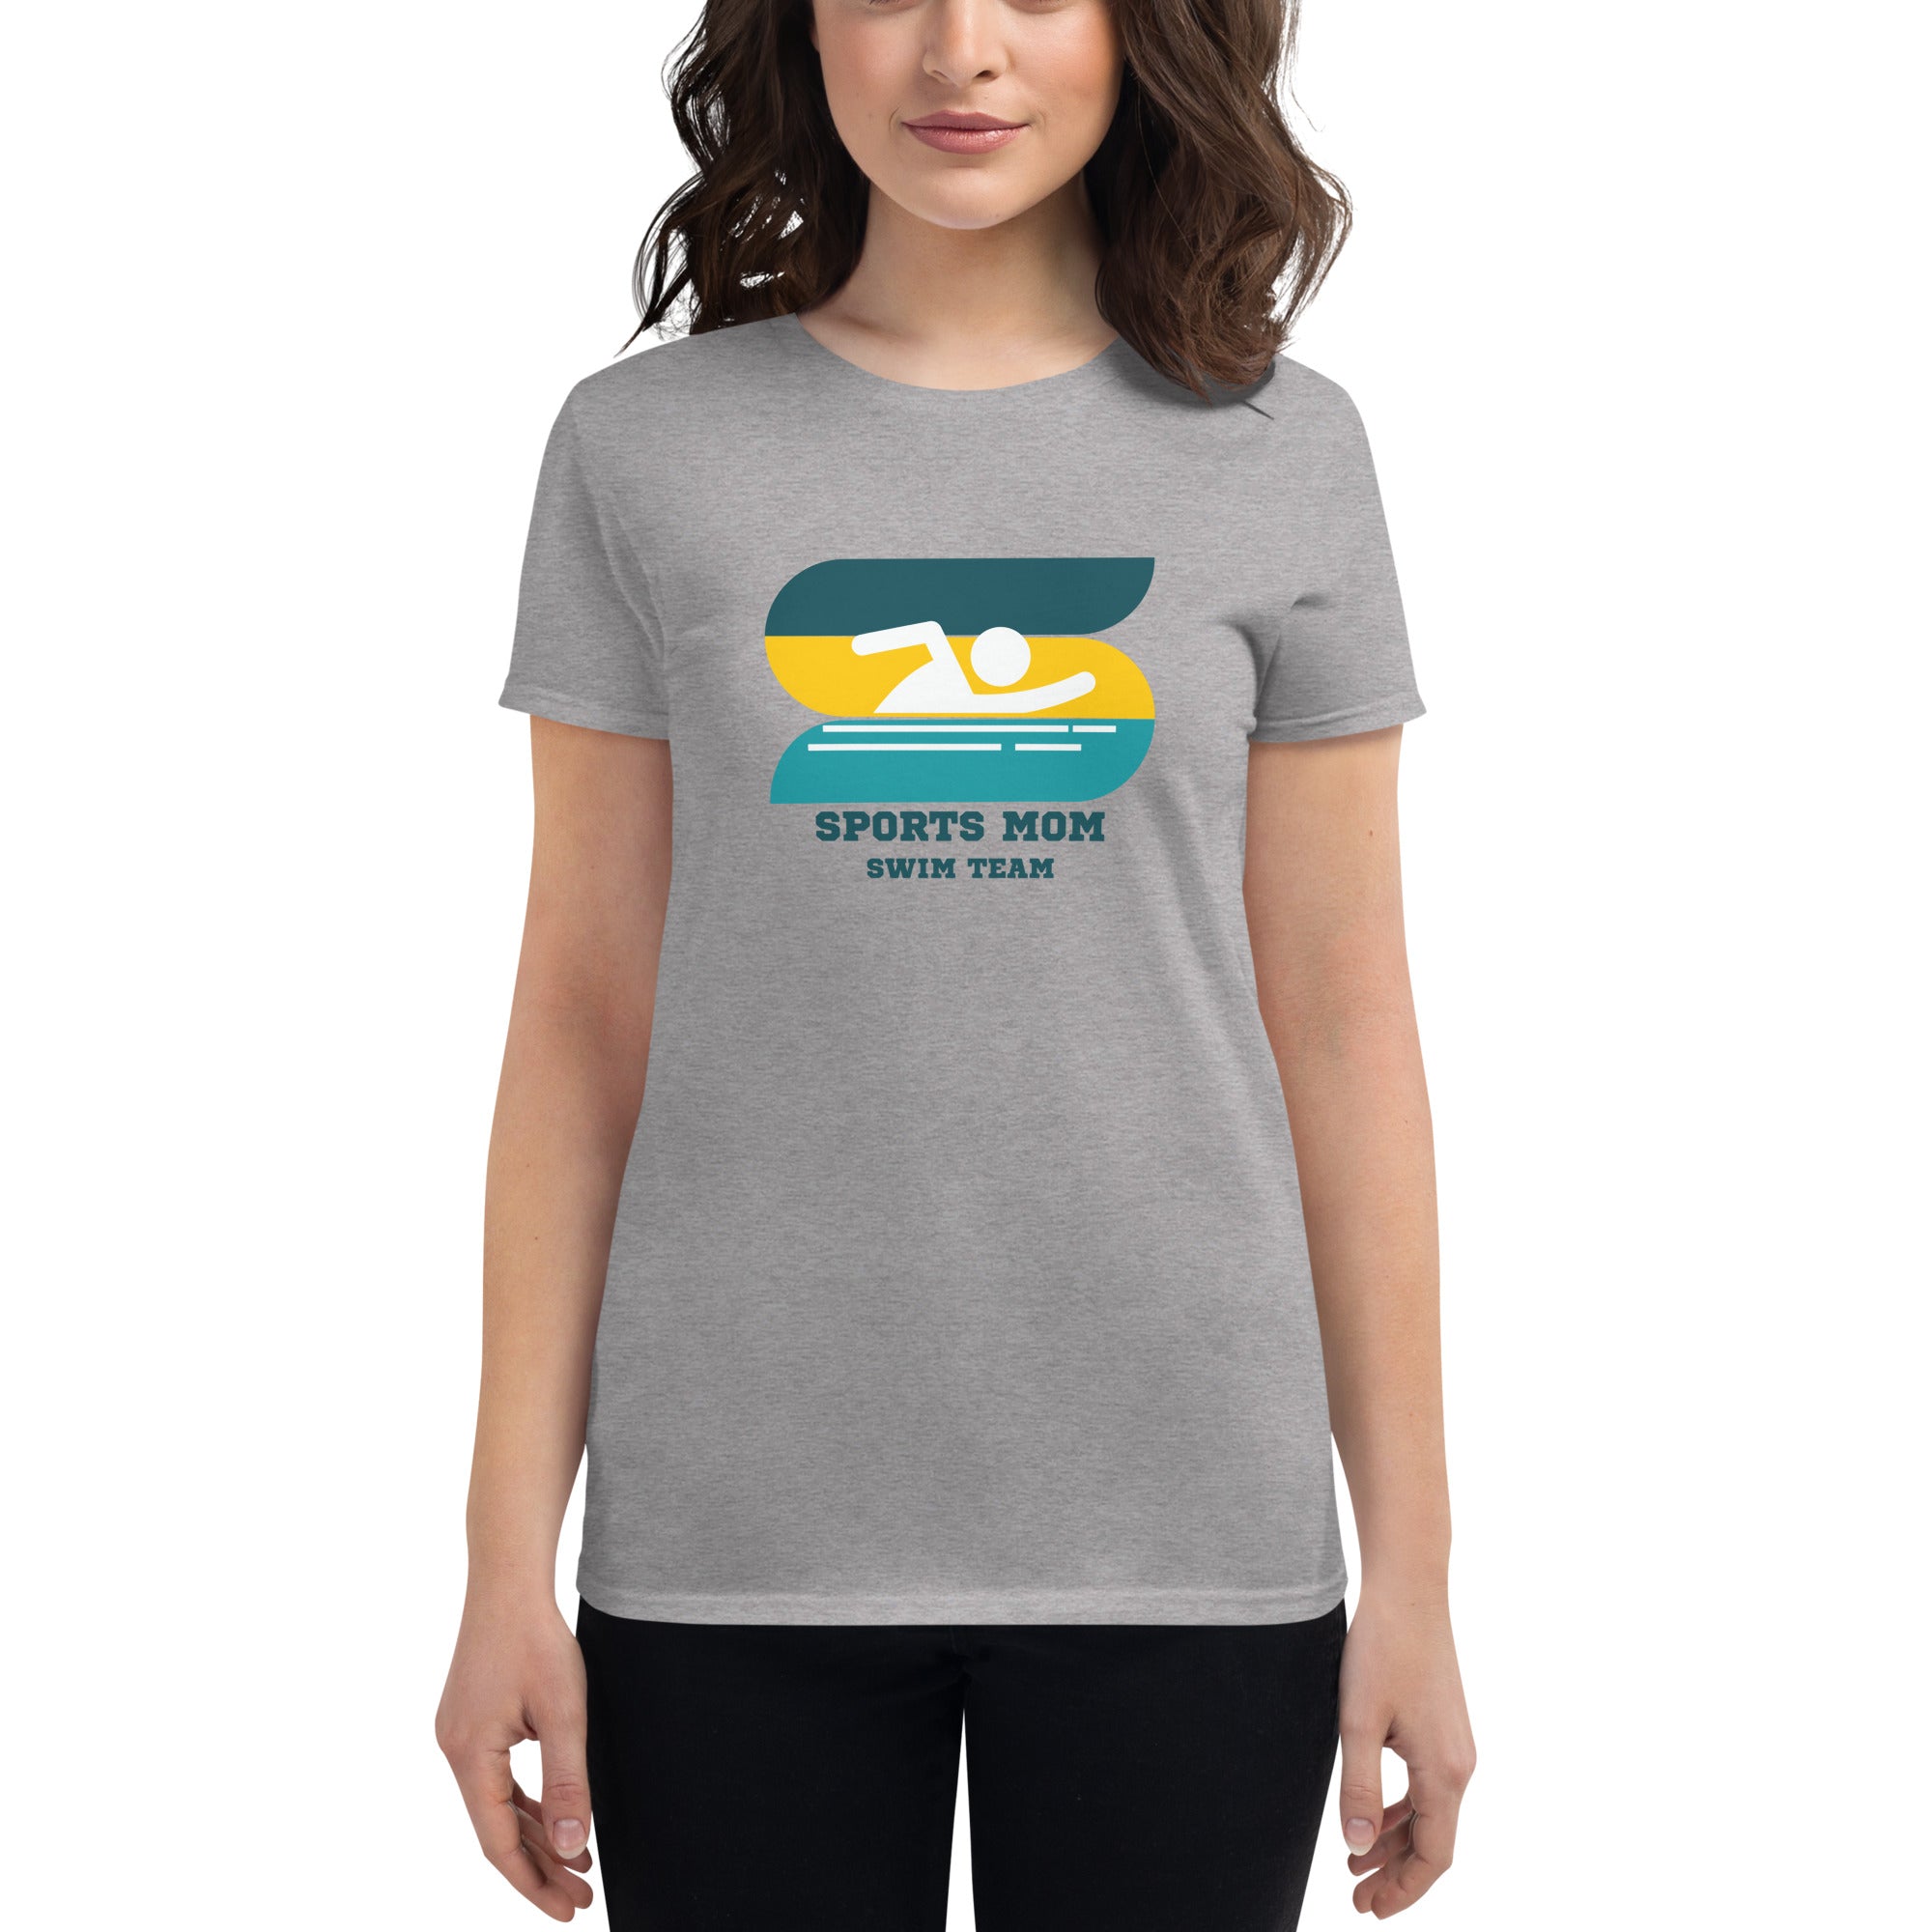 The Original Sports Mom Swim Team Women's Fitted T-Shirt